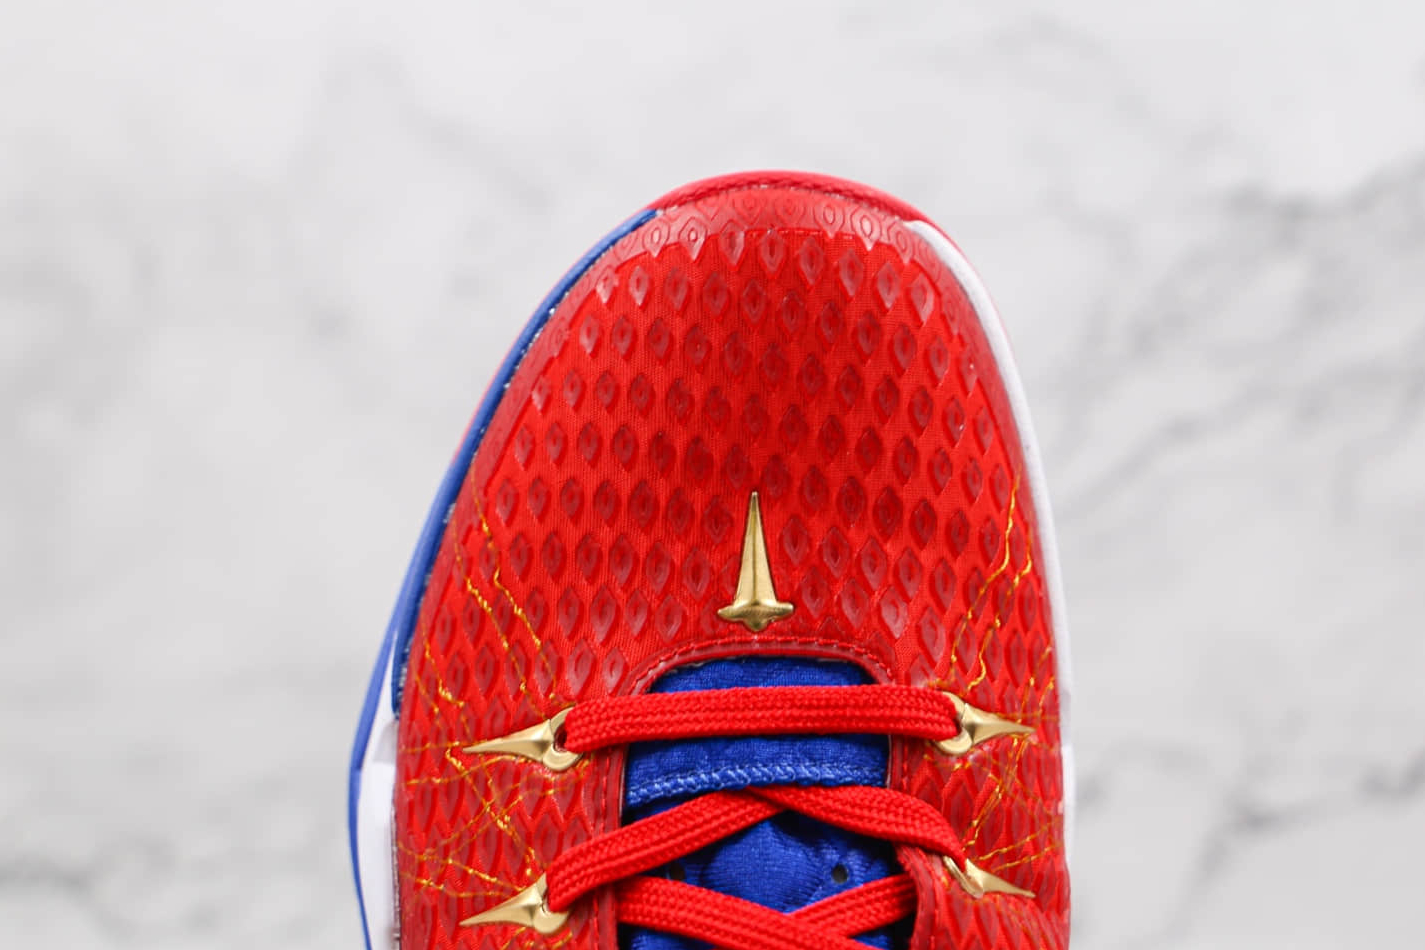 Nike Zoom Kobe VII RLX Red Blue Metallic Gold 488371-406 - Shop Now for Stylish Basketball Shoes!